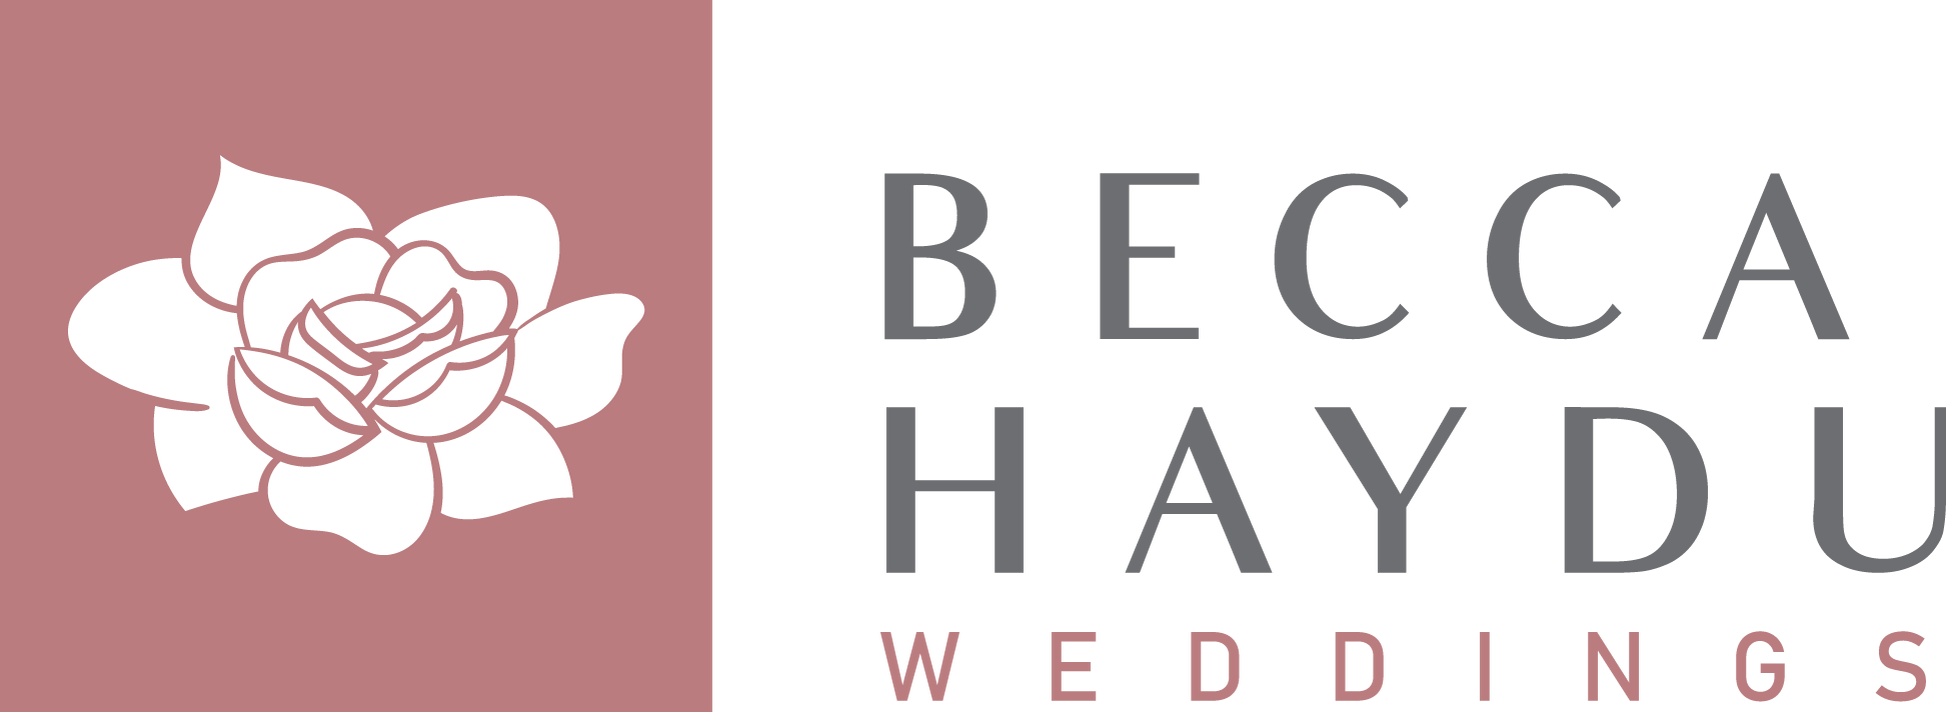 Becca Haydu Weddings